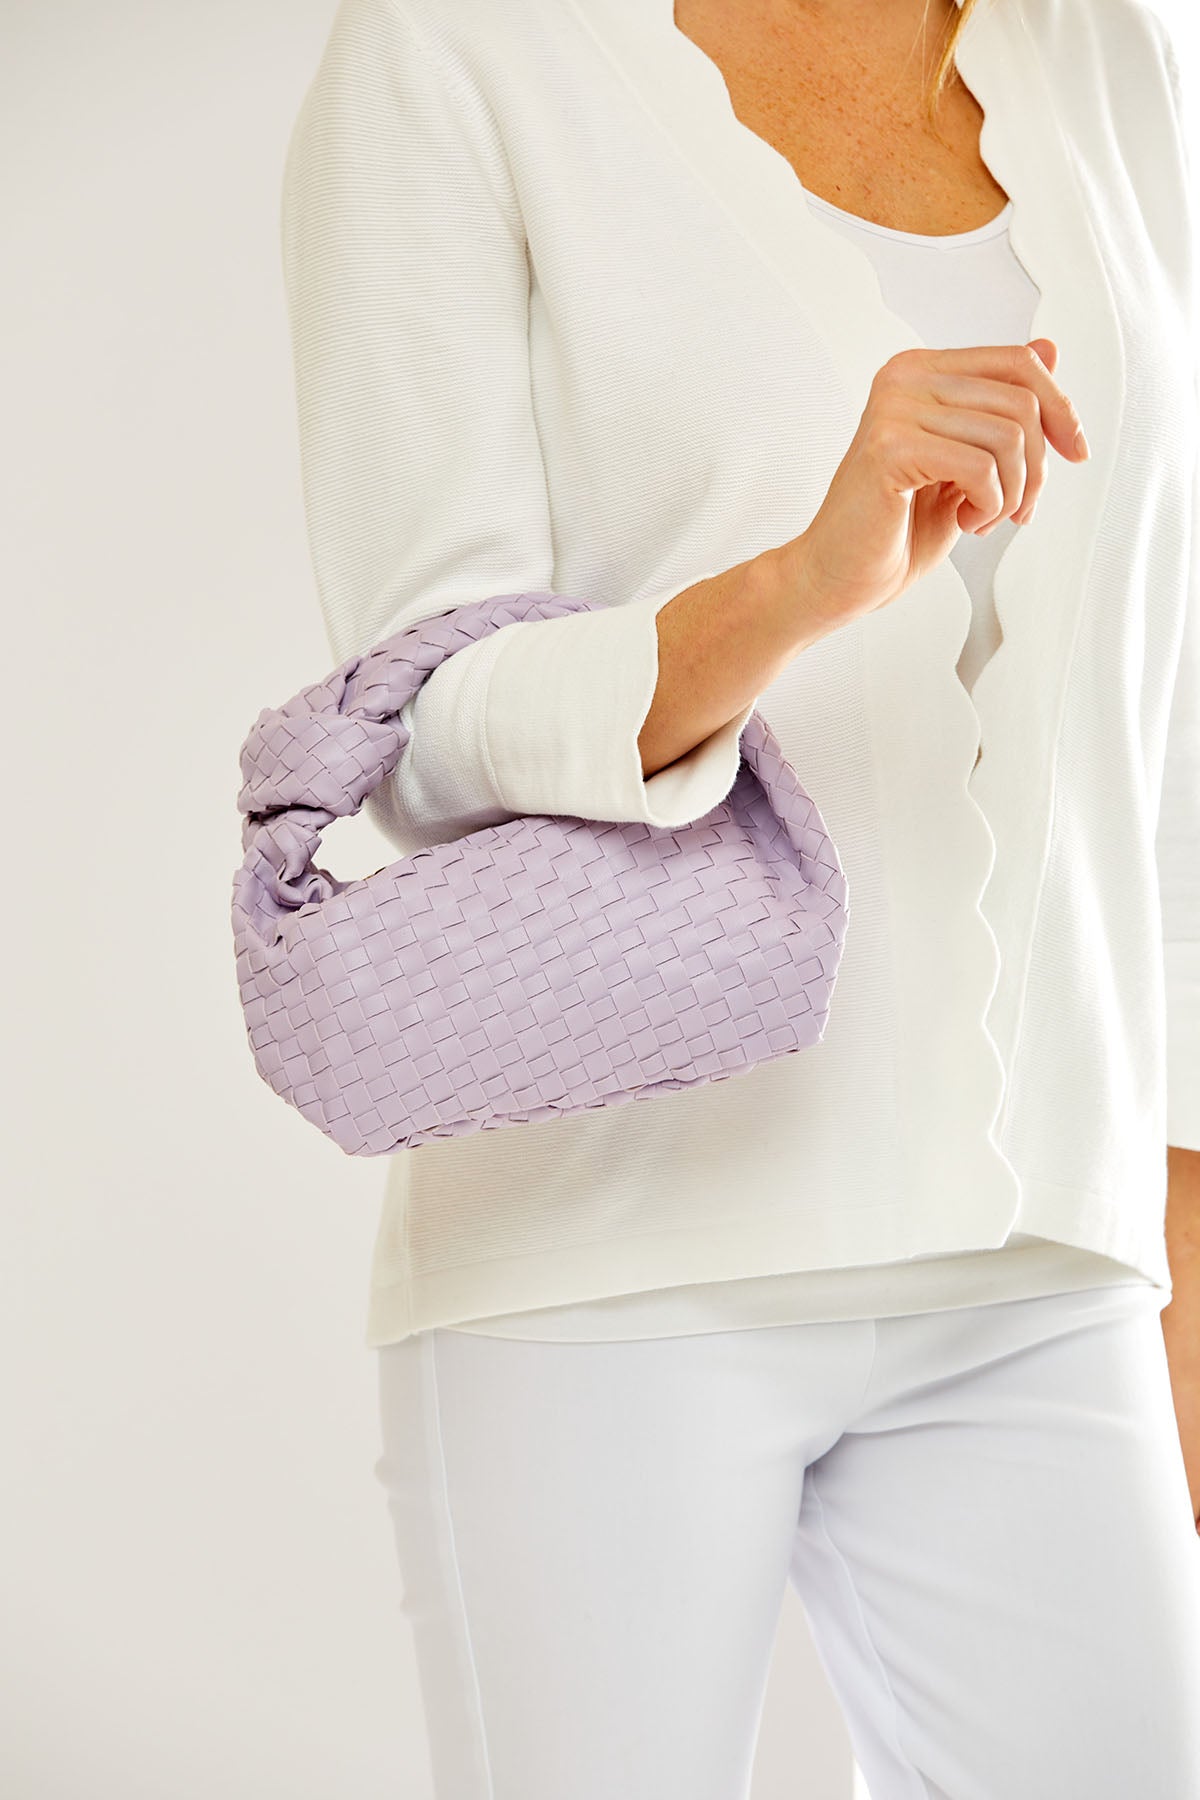 Woman holding a purple bag